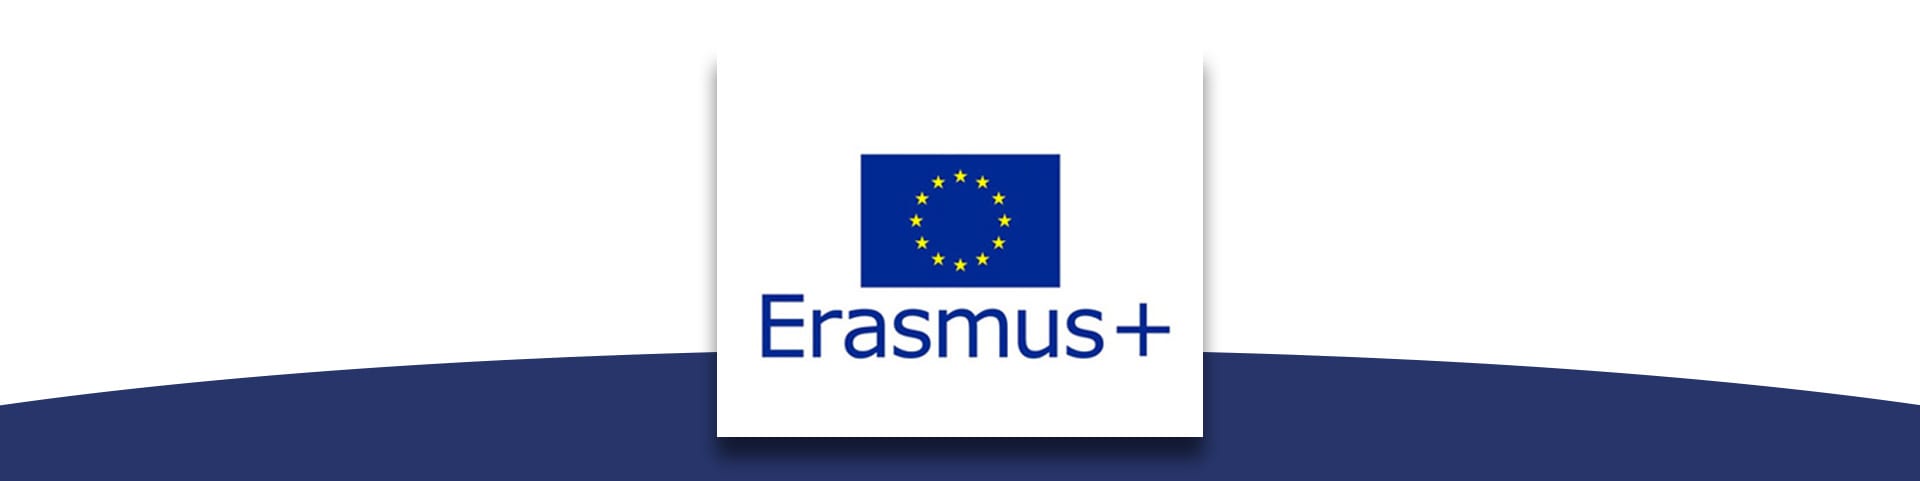 Erasmus+no alt text set su stradedeuropa.eu